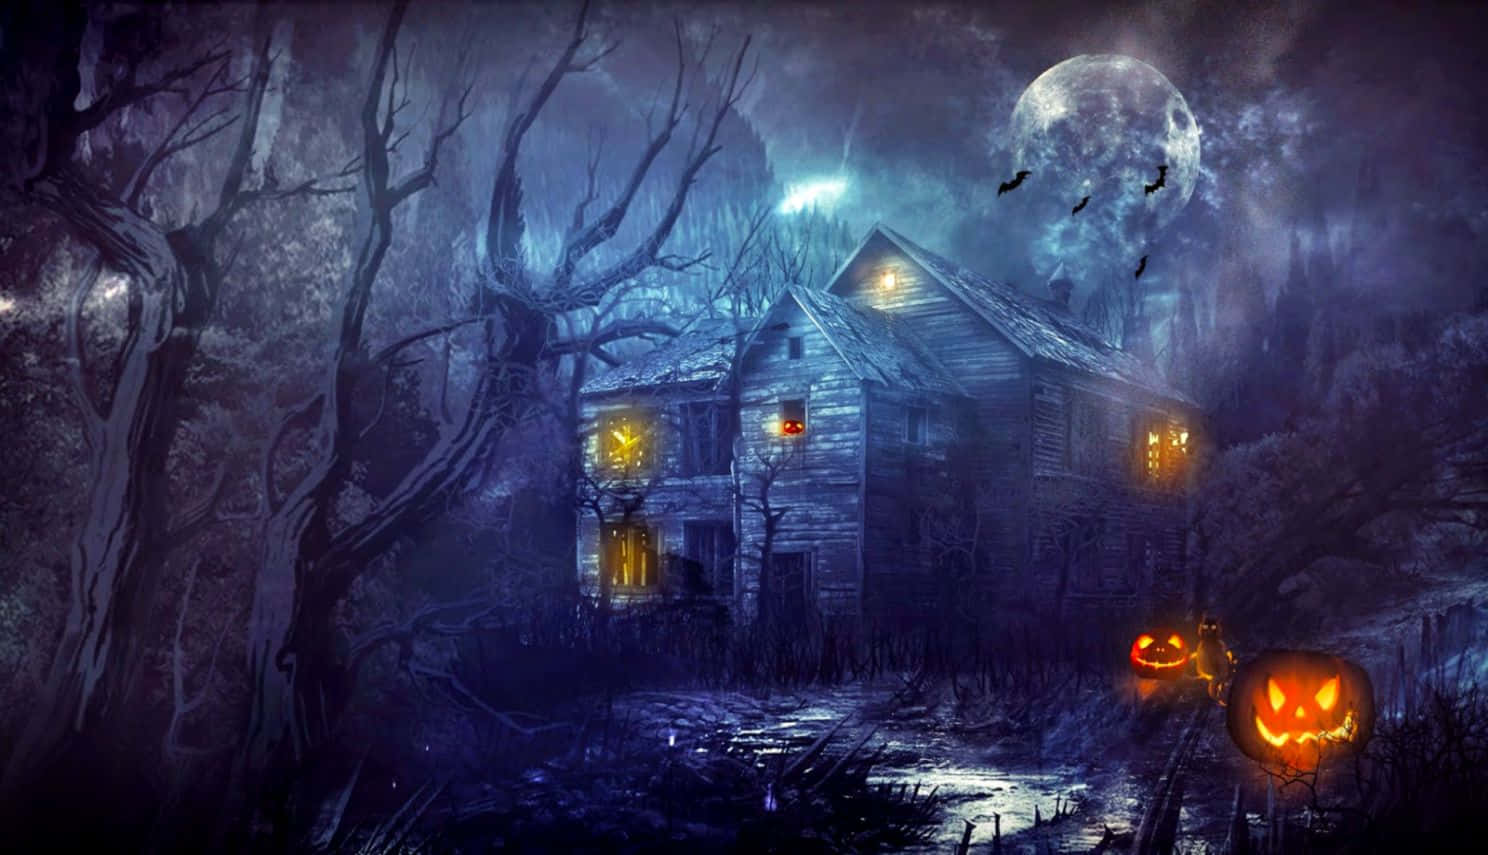 Spooky Halloween Comes Alive in the Graveyard Wallpaper